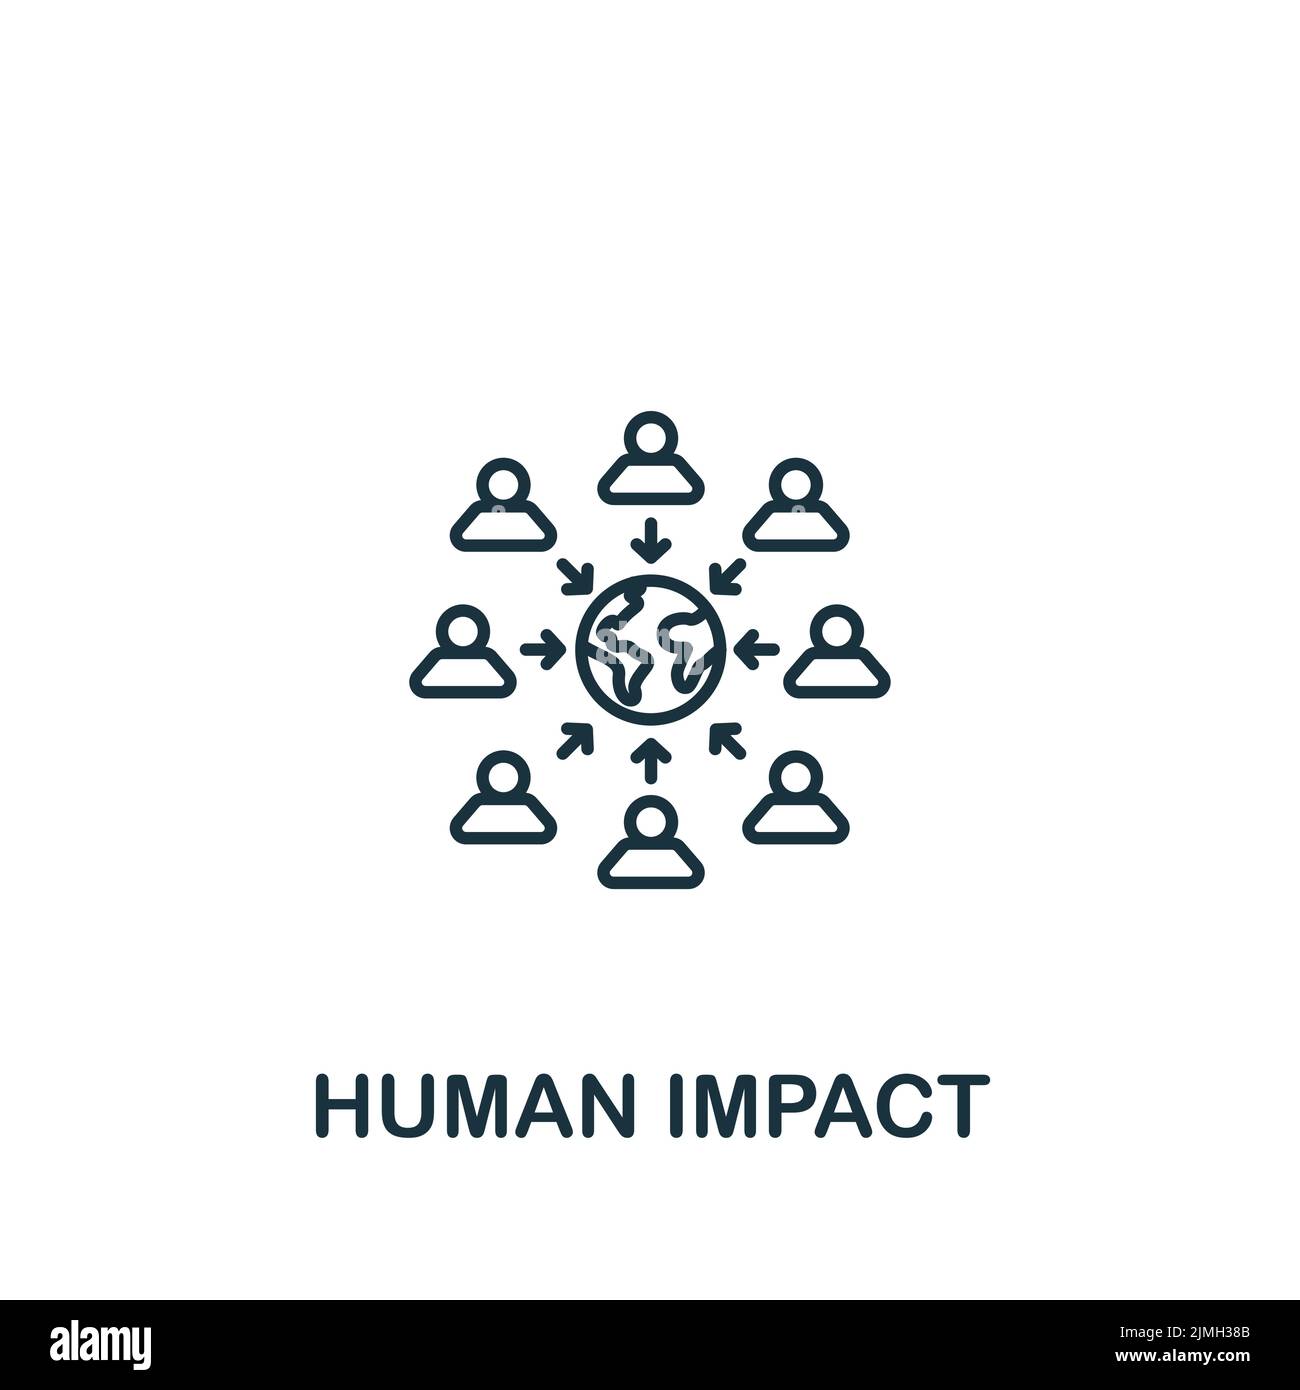 Icono De Impacto Humano Icono Sencillo Monocromo Para Plantillas Diseño Web E Infografías 2306